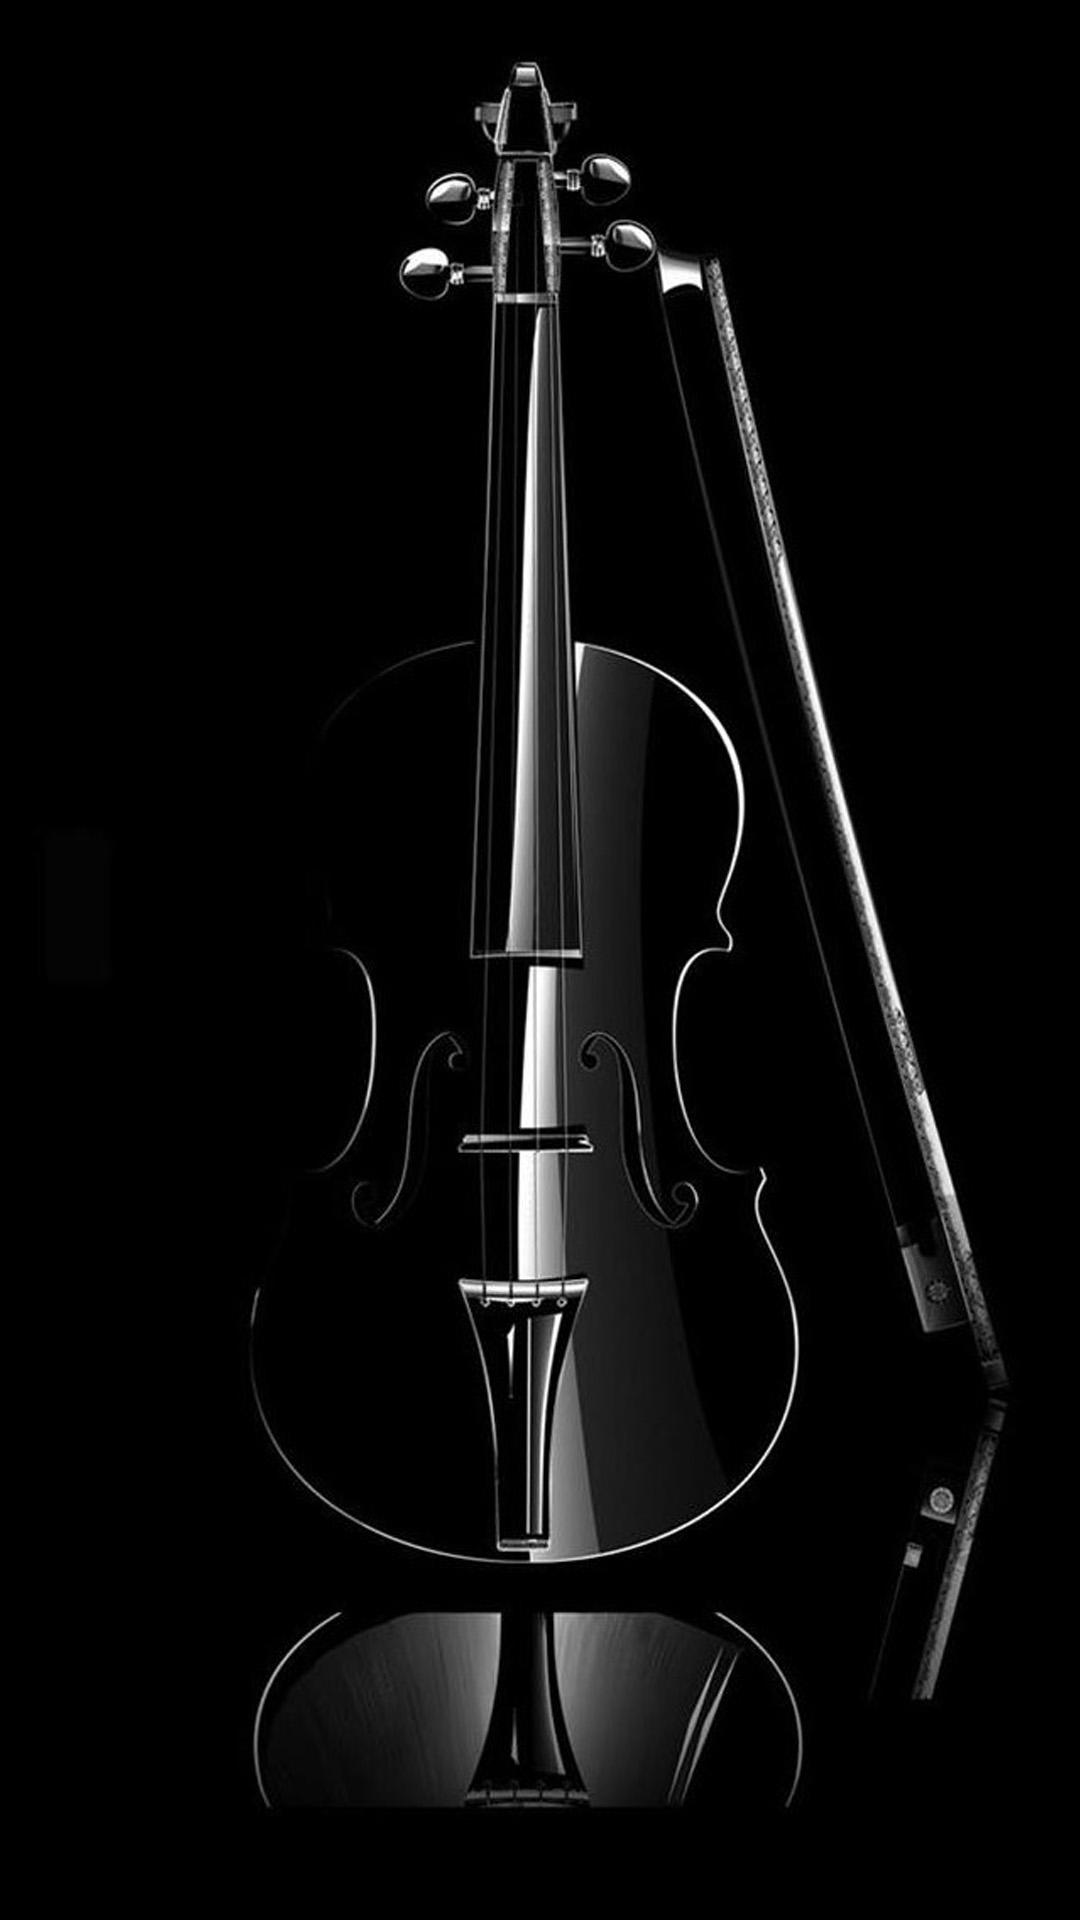 Elegant Cello Music Instrument iPhone 8 Wallpaper Free Download